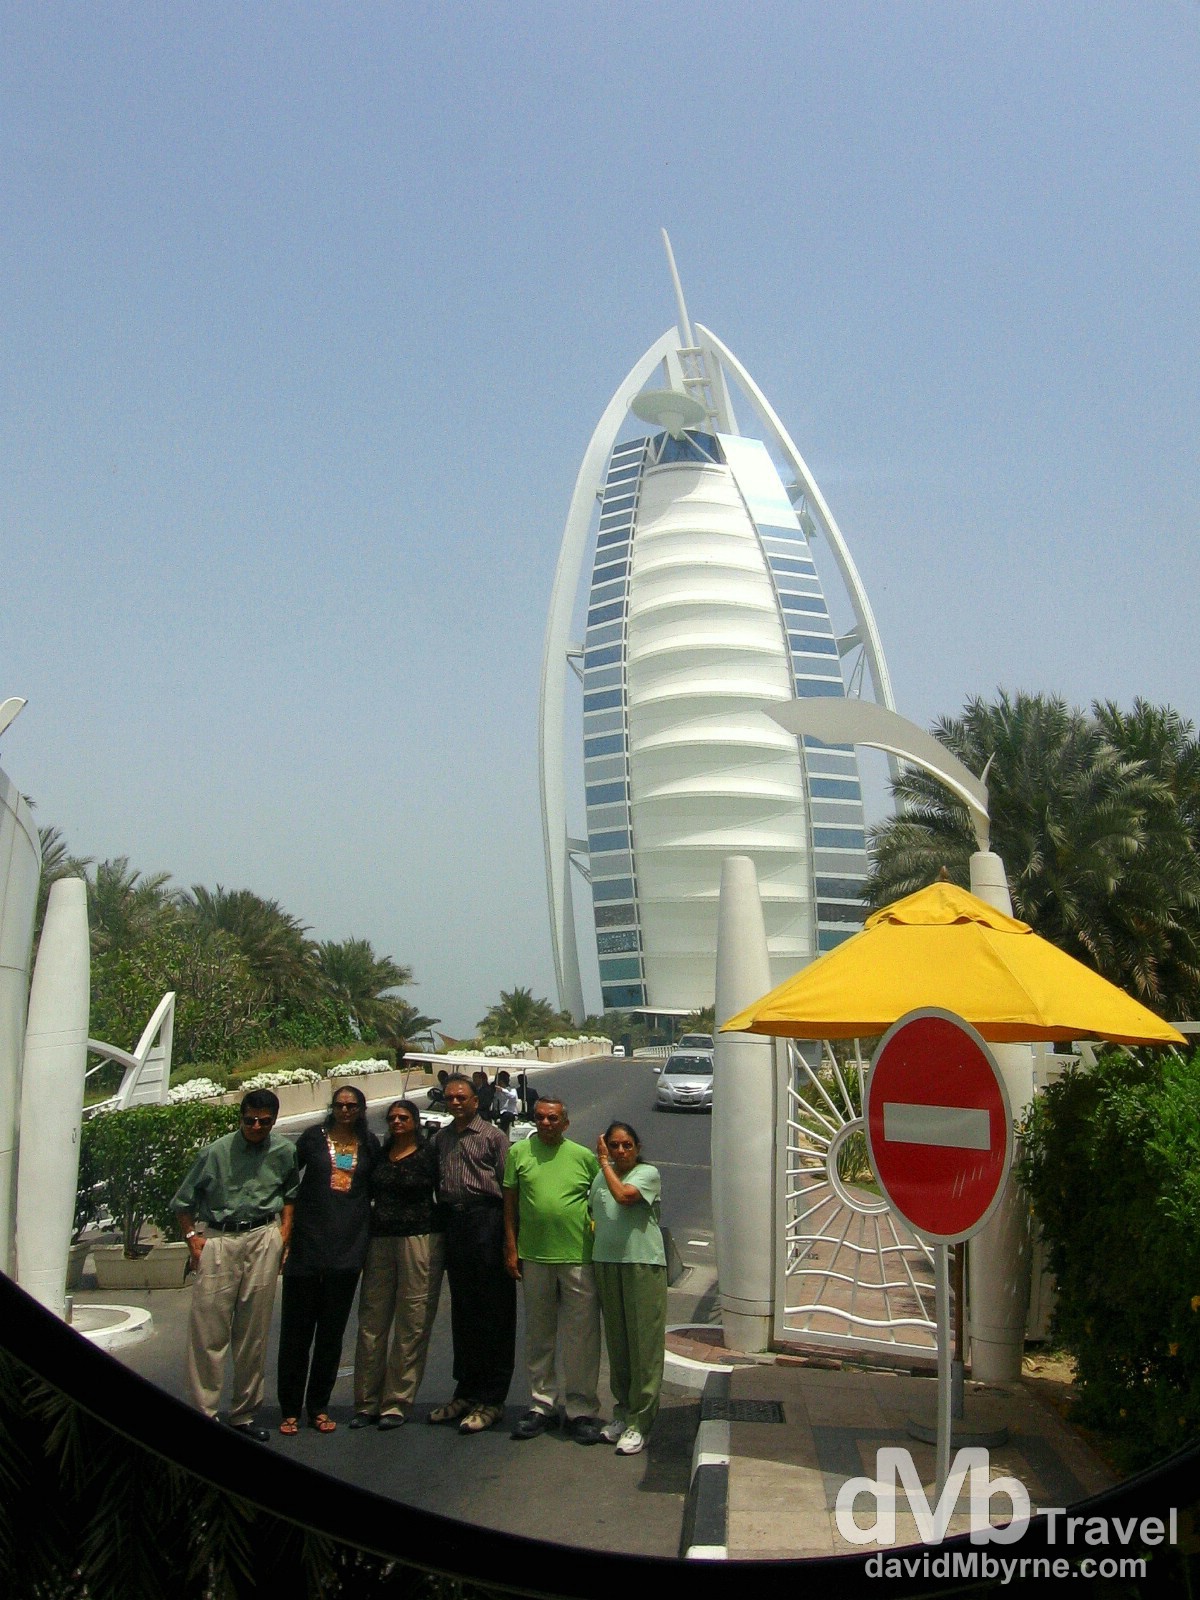 Burj Al Arab Hotel, Dubai, Unite Arab Emirates